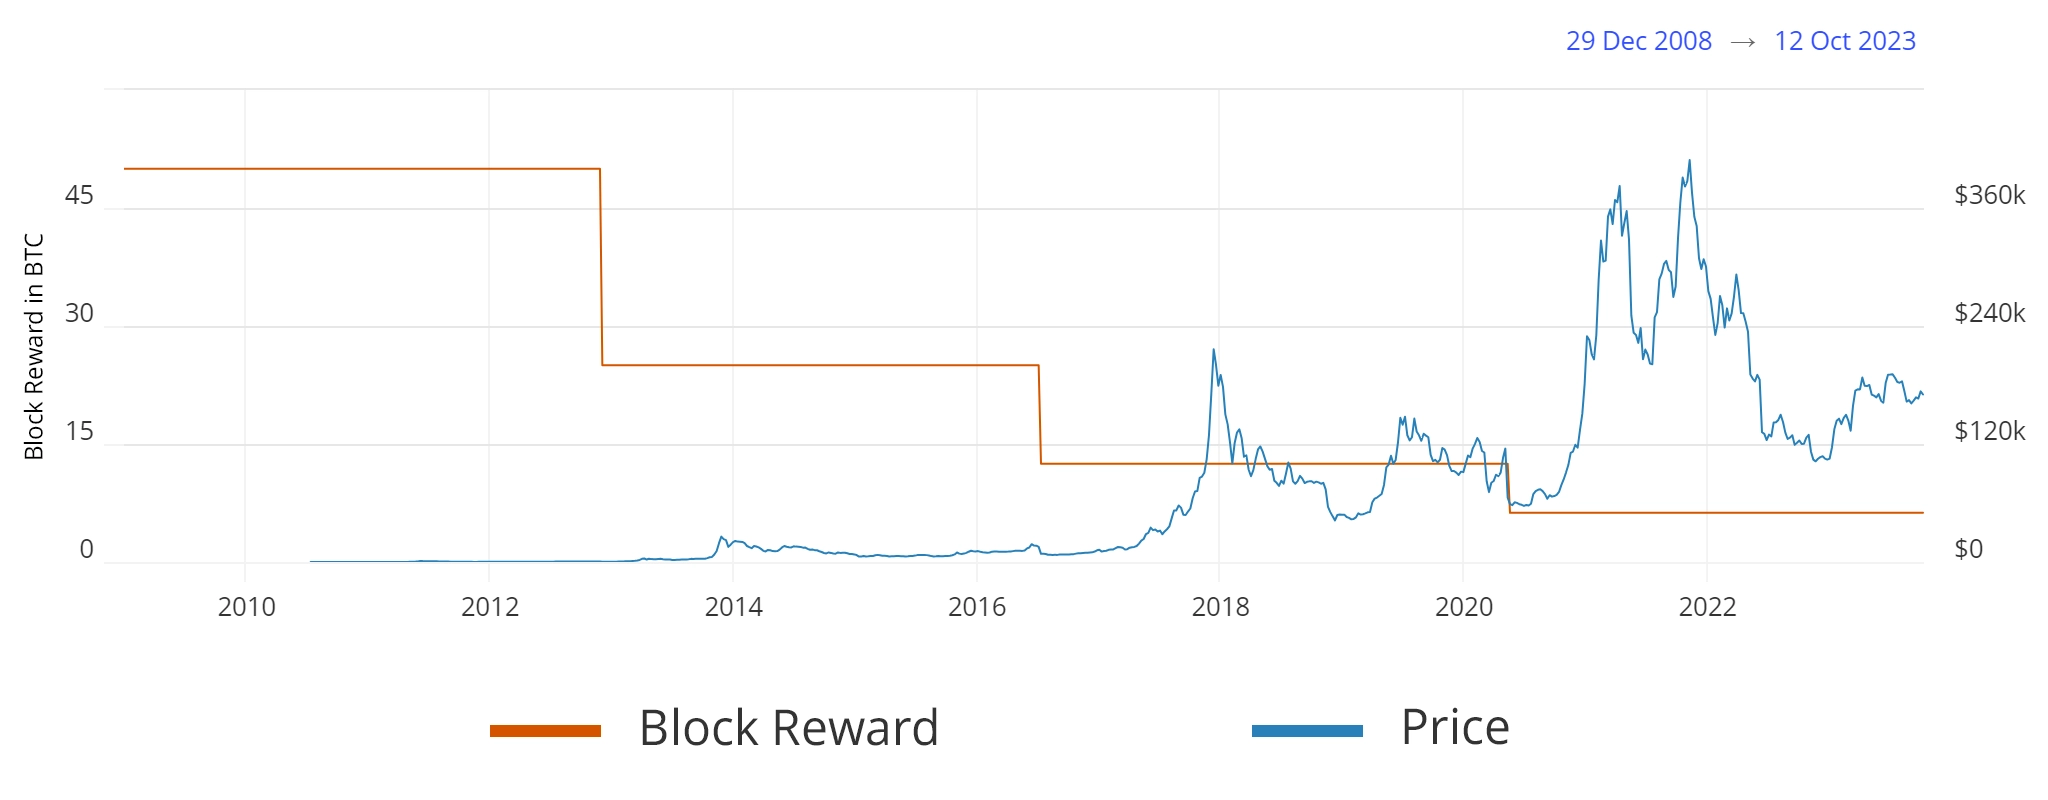 Block Reward in BTC over time